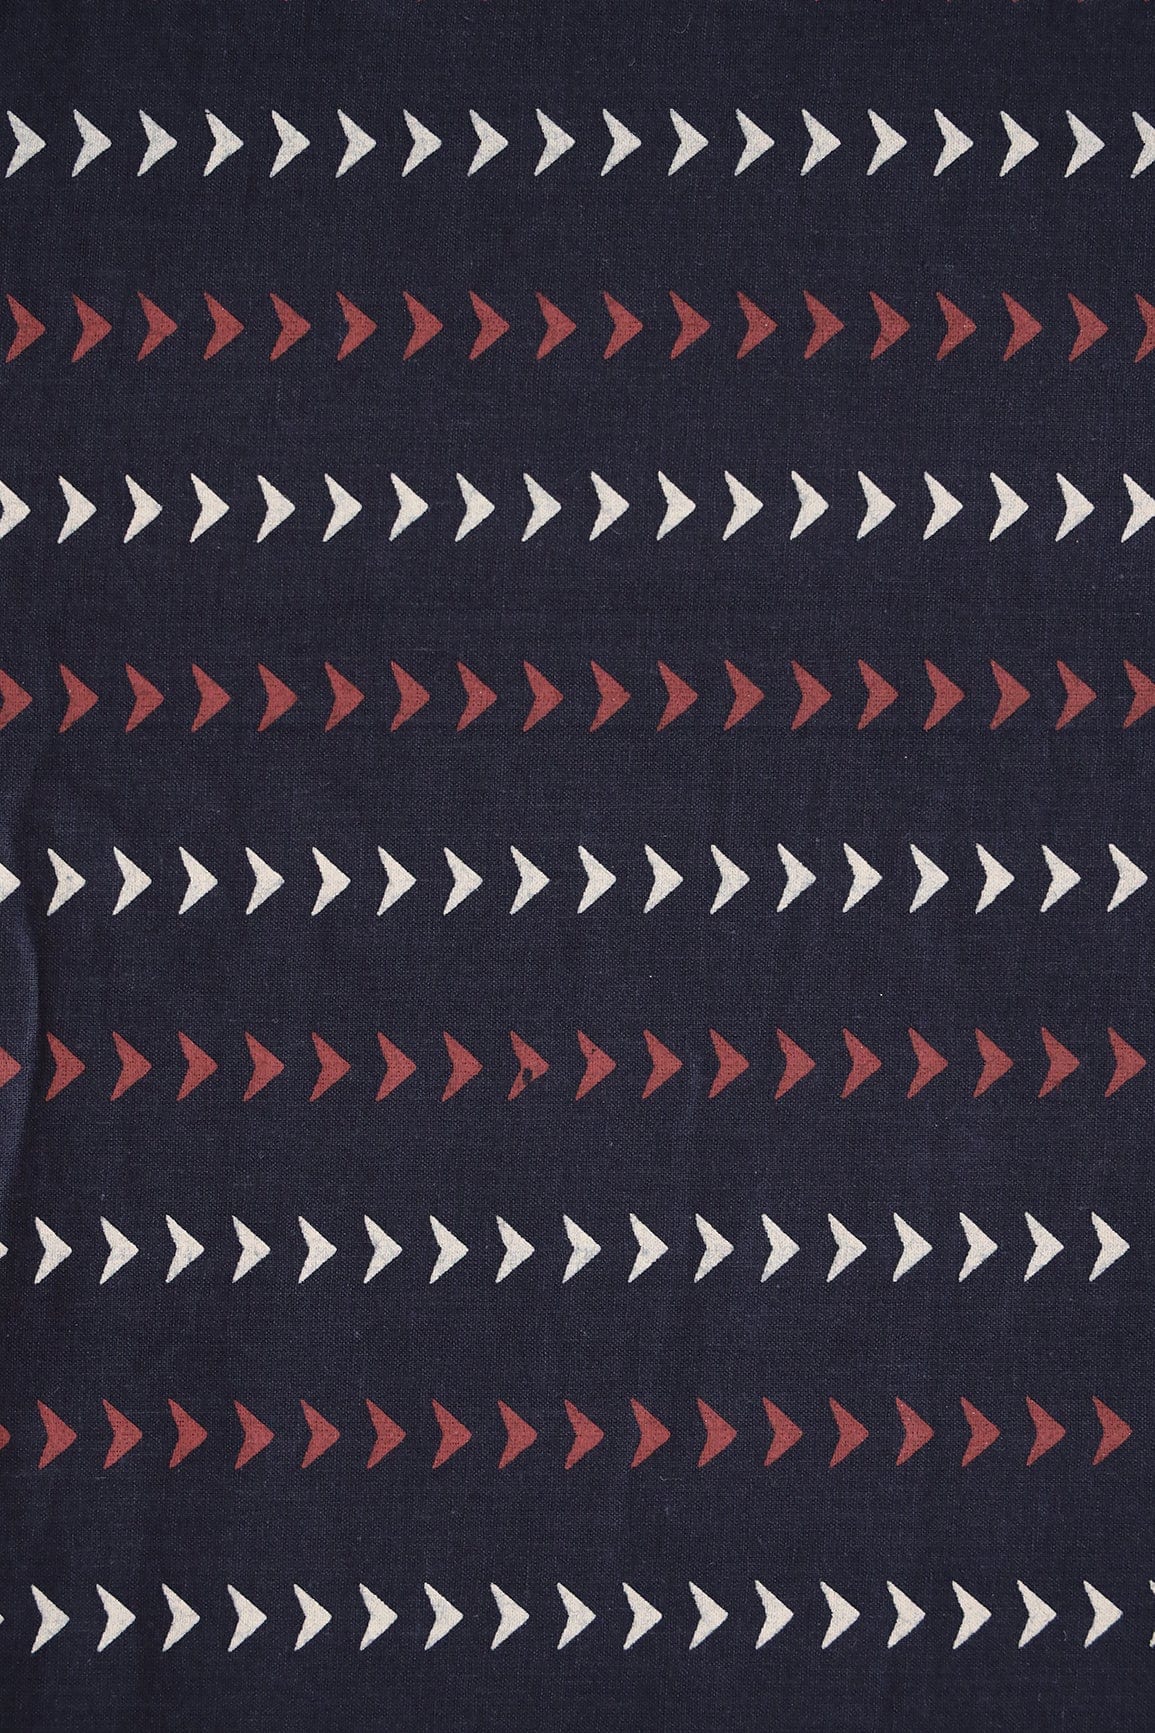 doeraa Prints Navy Blue And Red Geometric Pattern Ajrakh Screen Print on organic Cotton Fabric